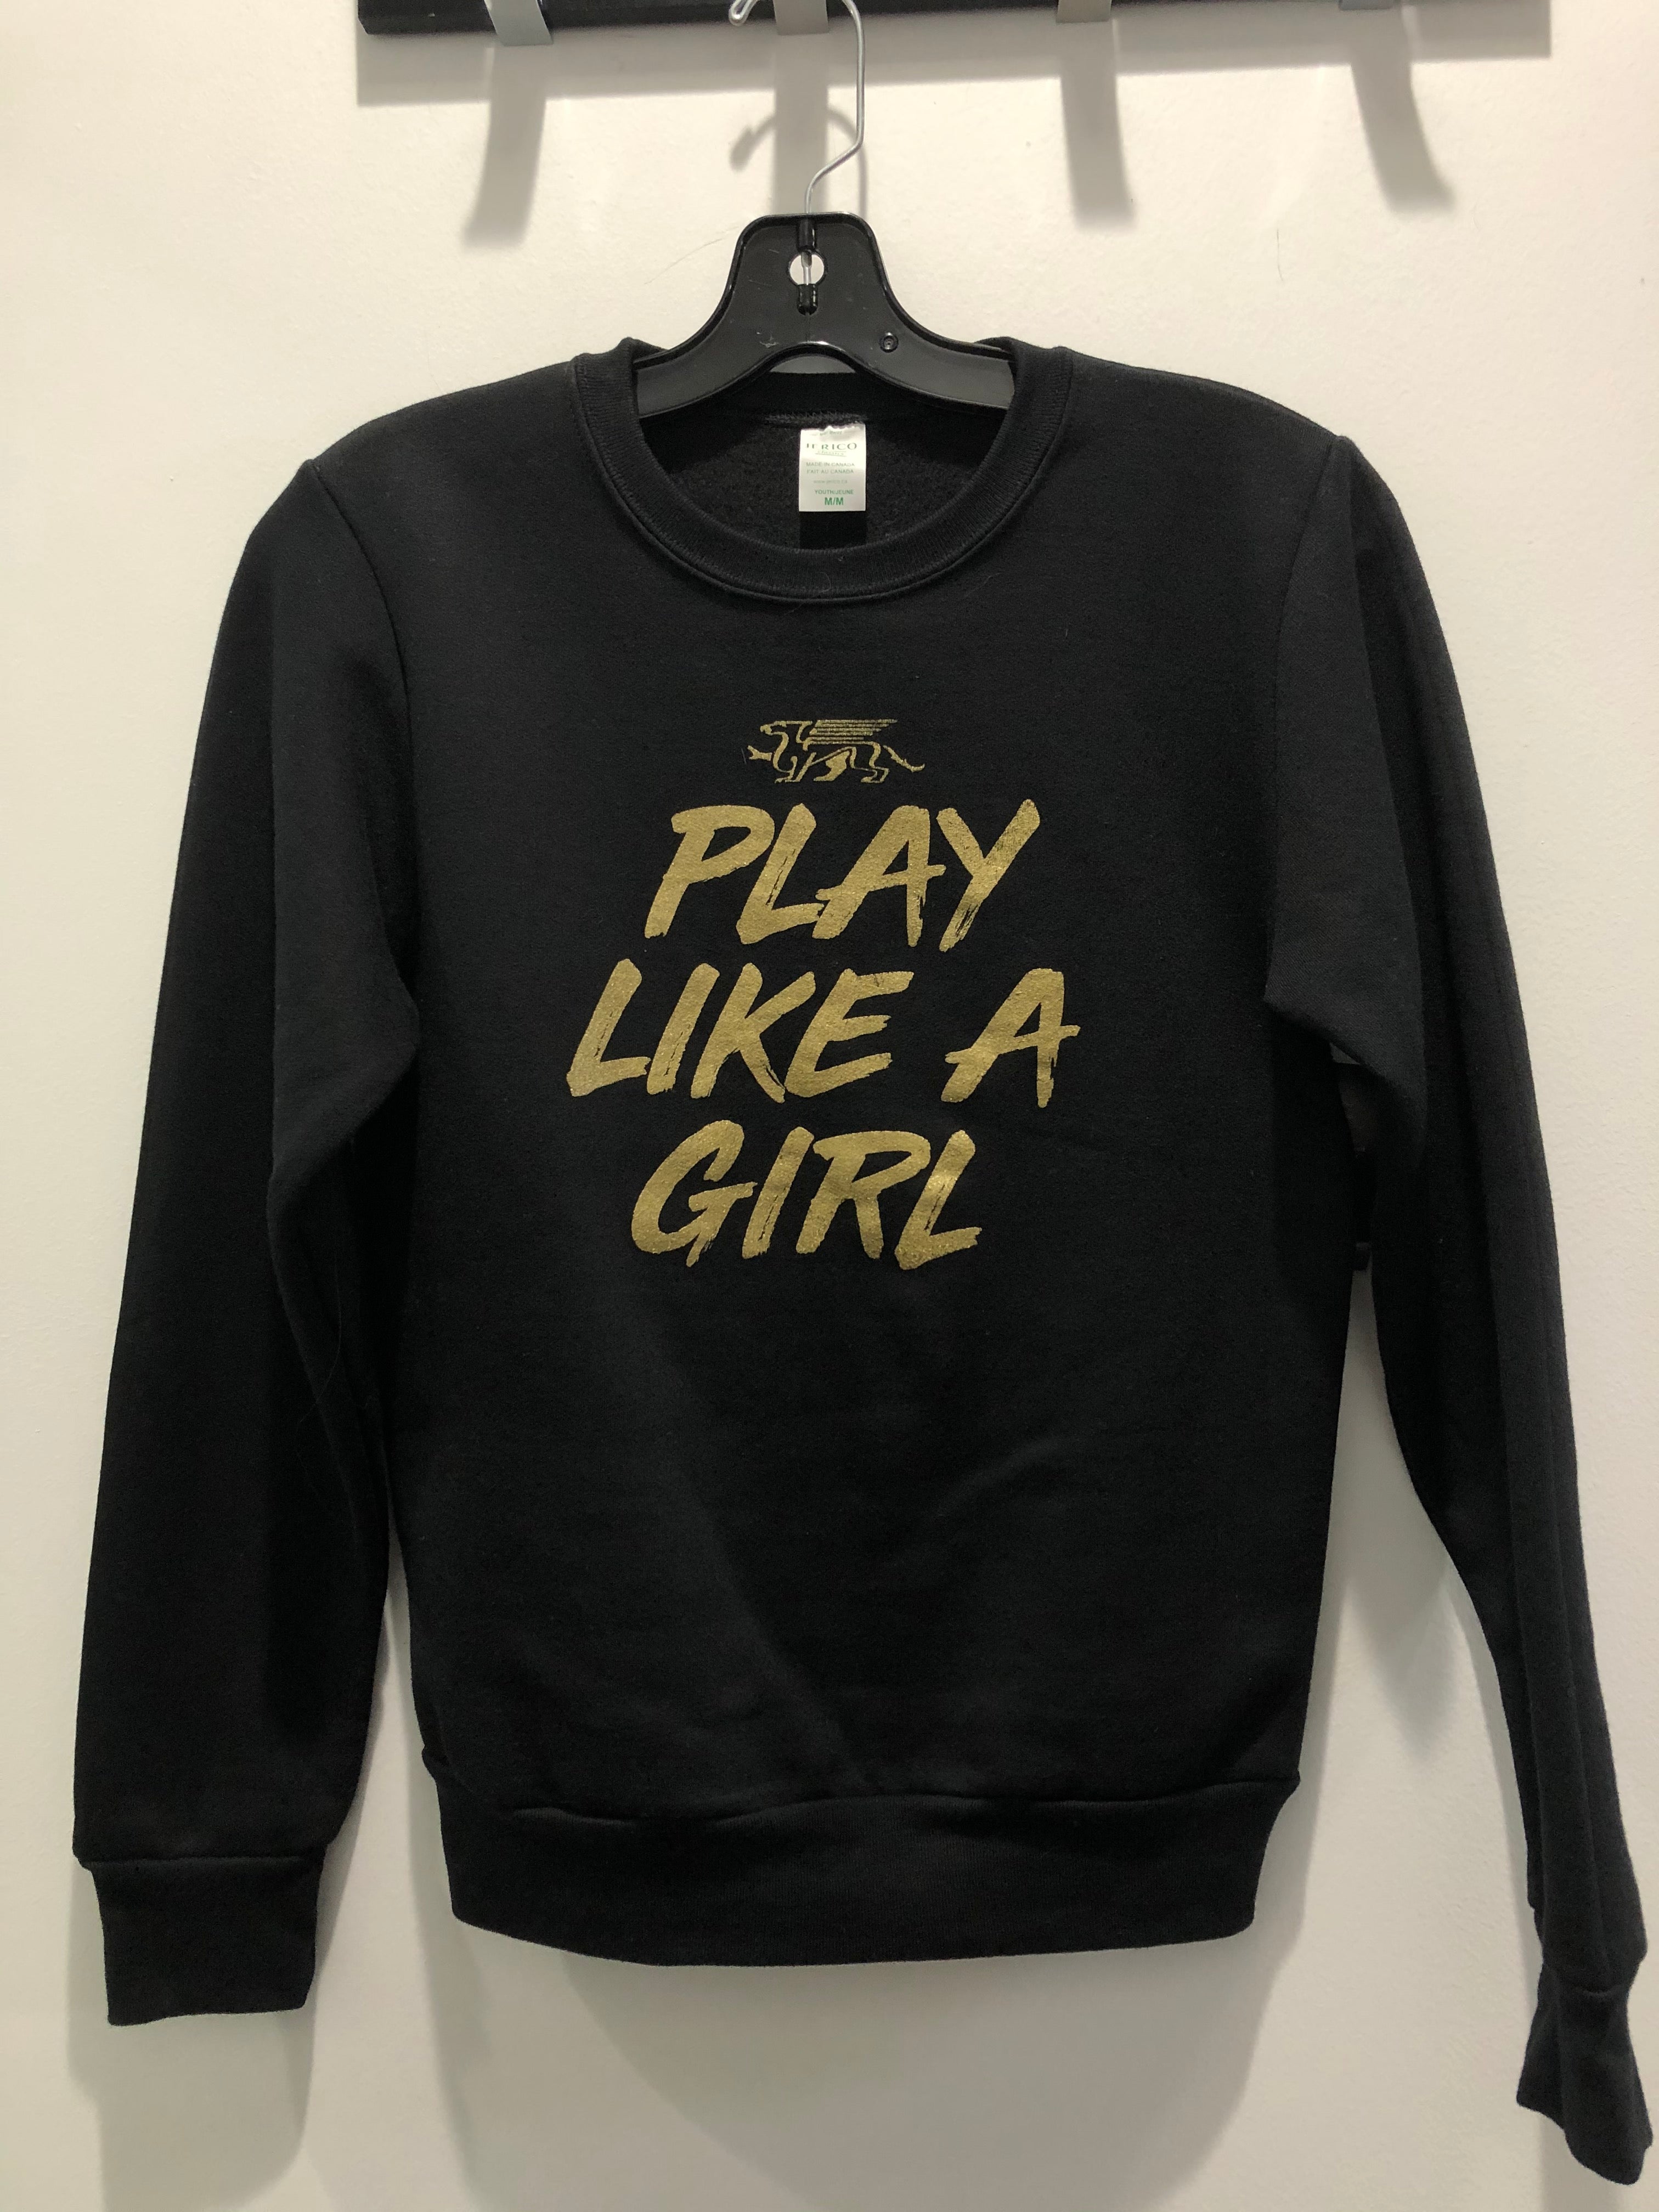 SGG - "Play Like A Girl" Crewneck Long-Sleeve YOUTH